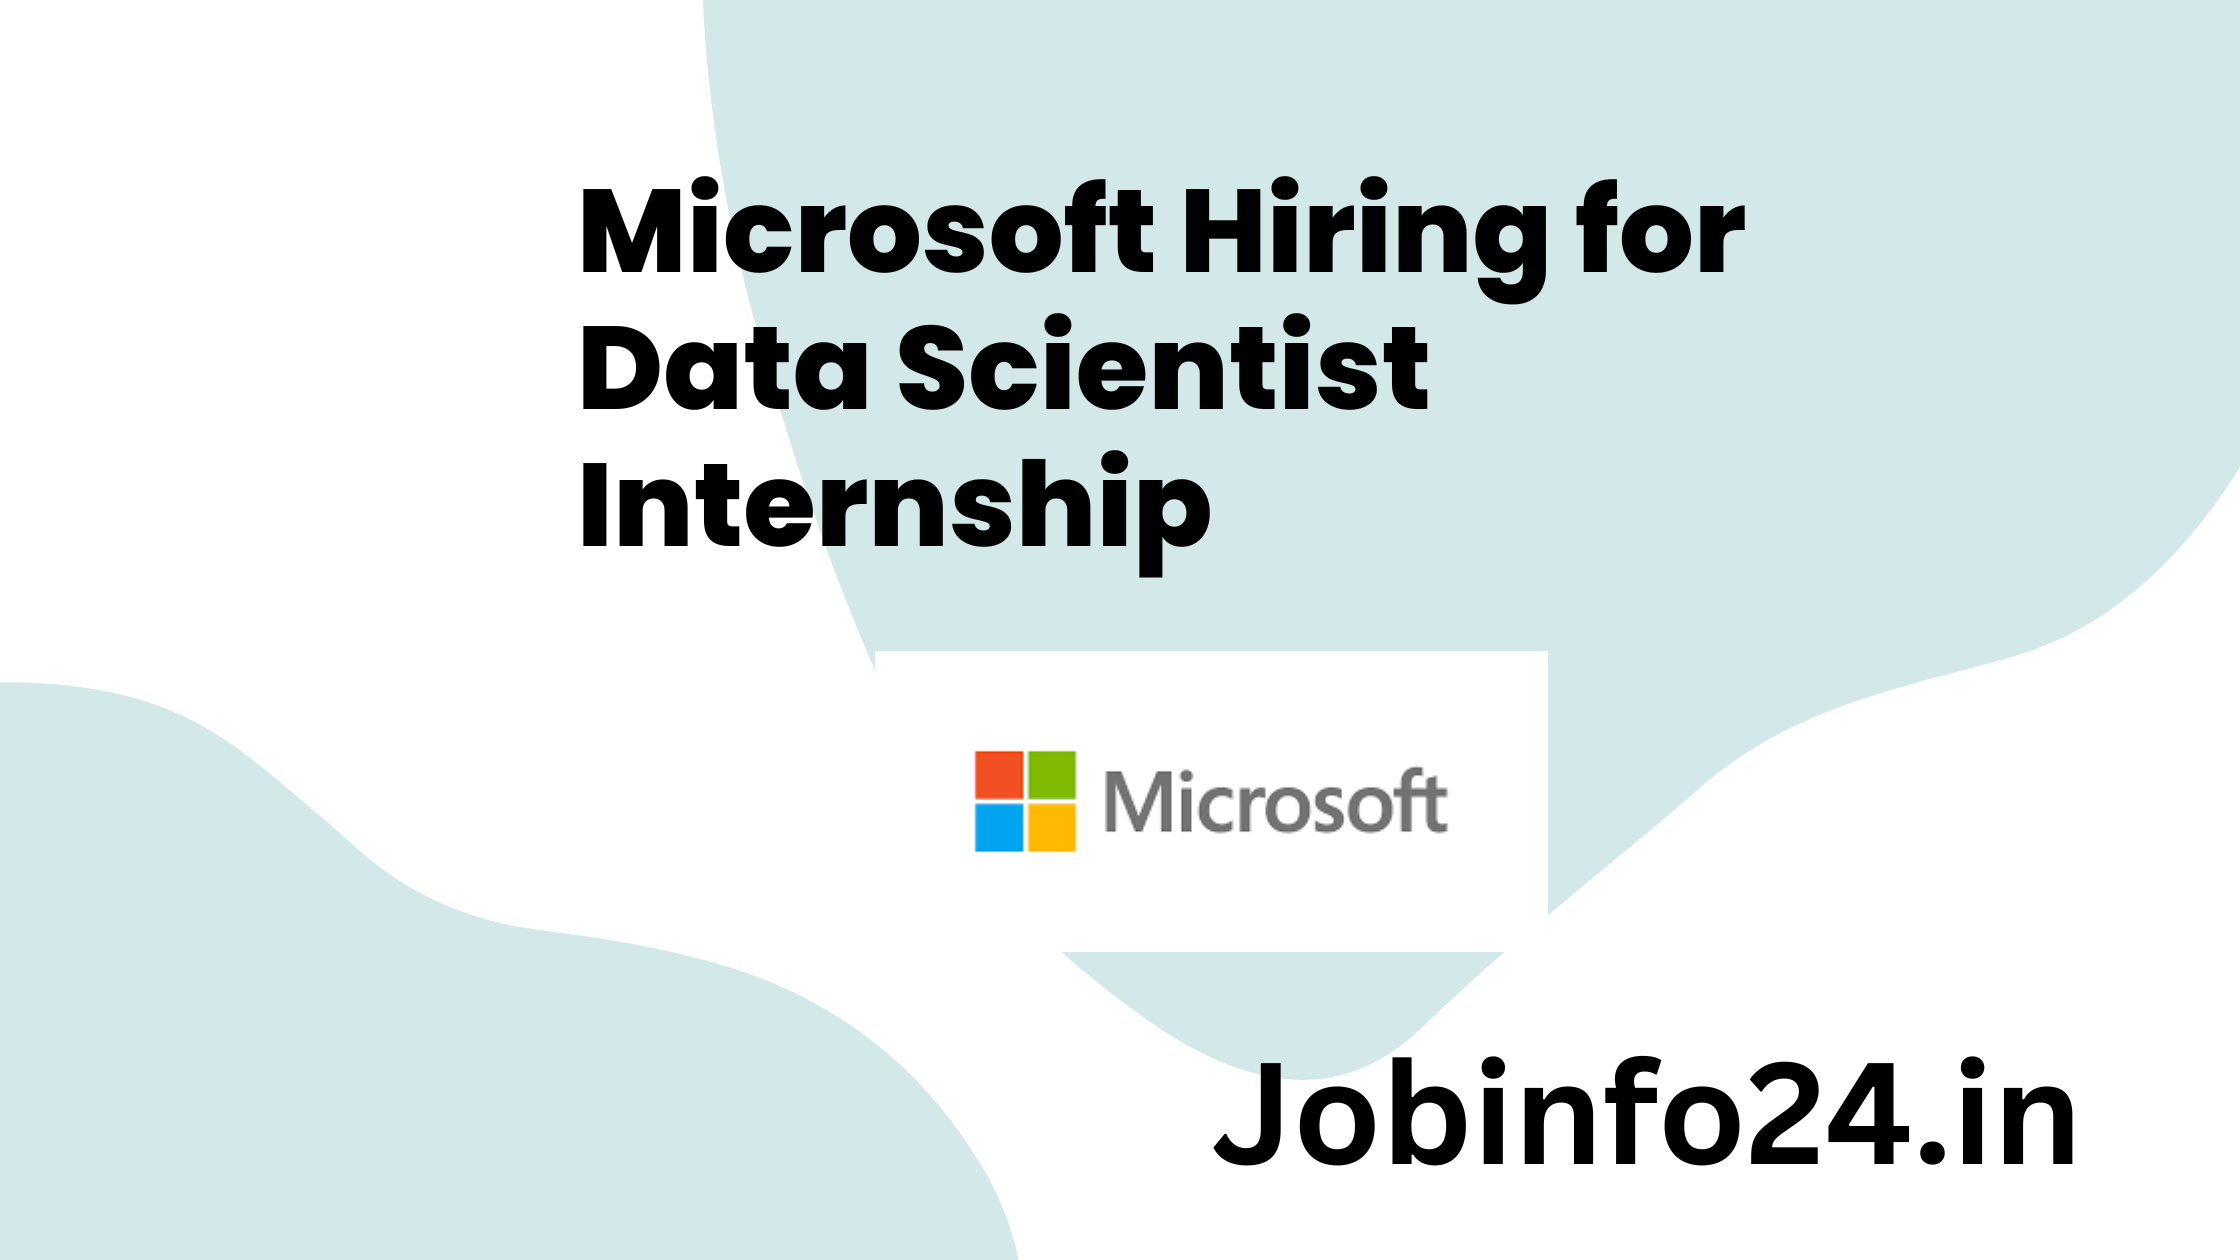 Microsoft Hiring for Data Scientist Internship